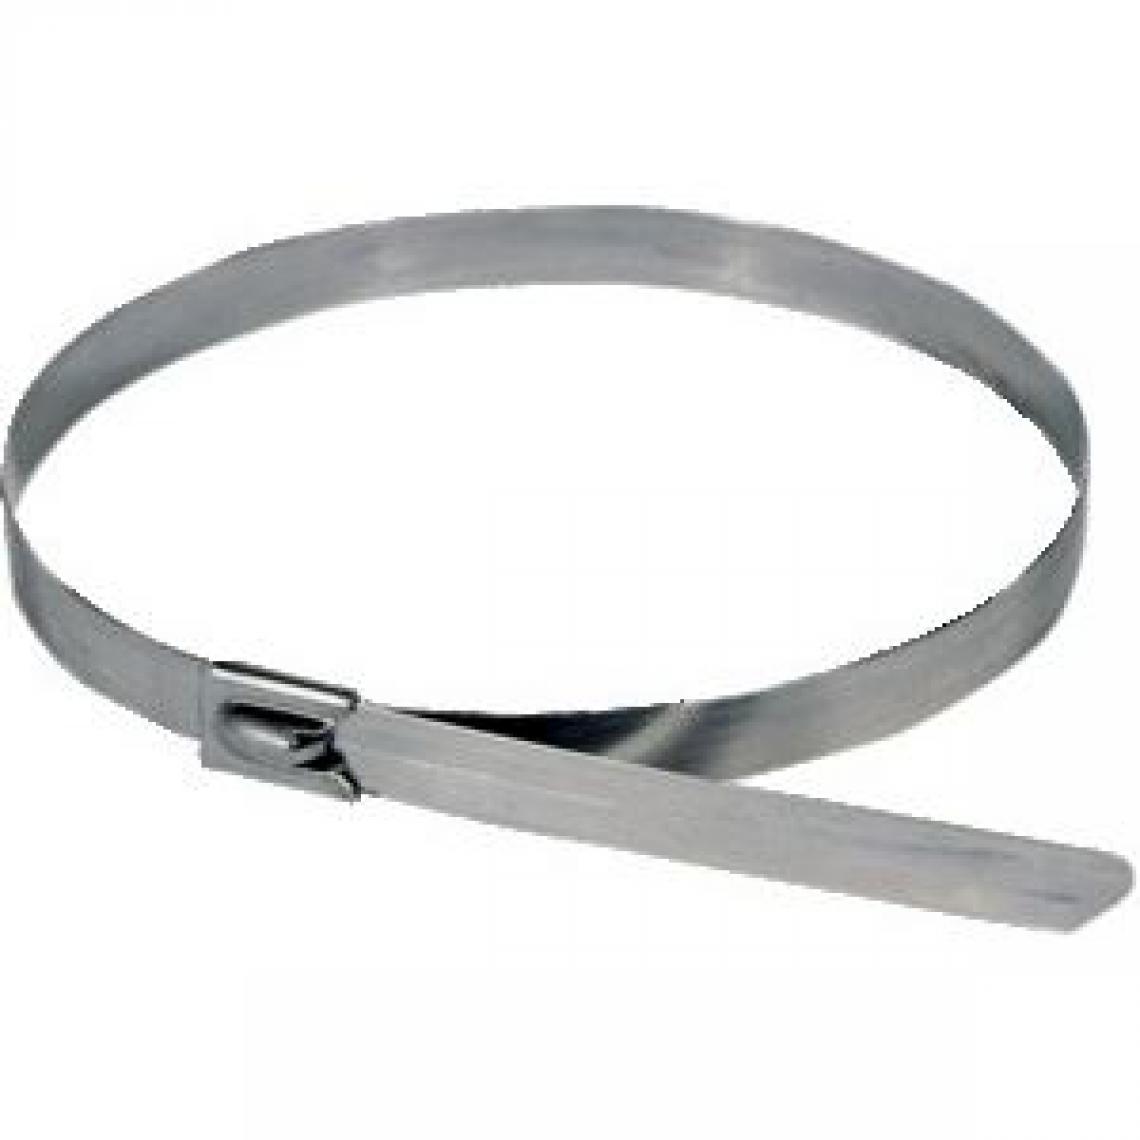 Bizline - collier de cablage - en inox - 500 x 7.9 mm x 50 - bizline 300124 - Accessoires de câblage